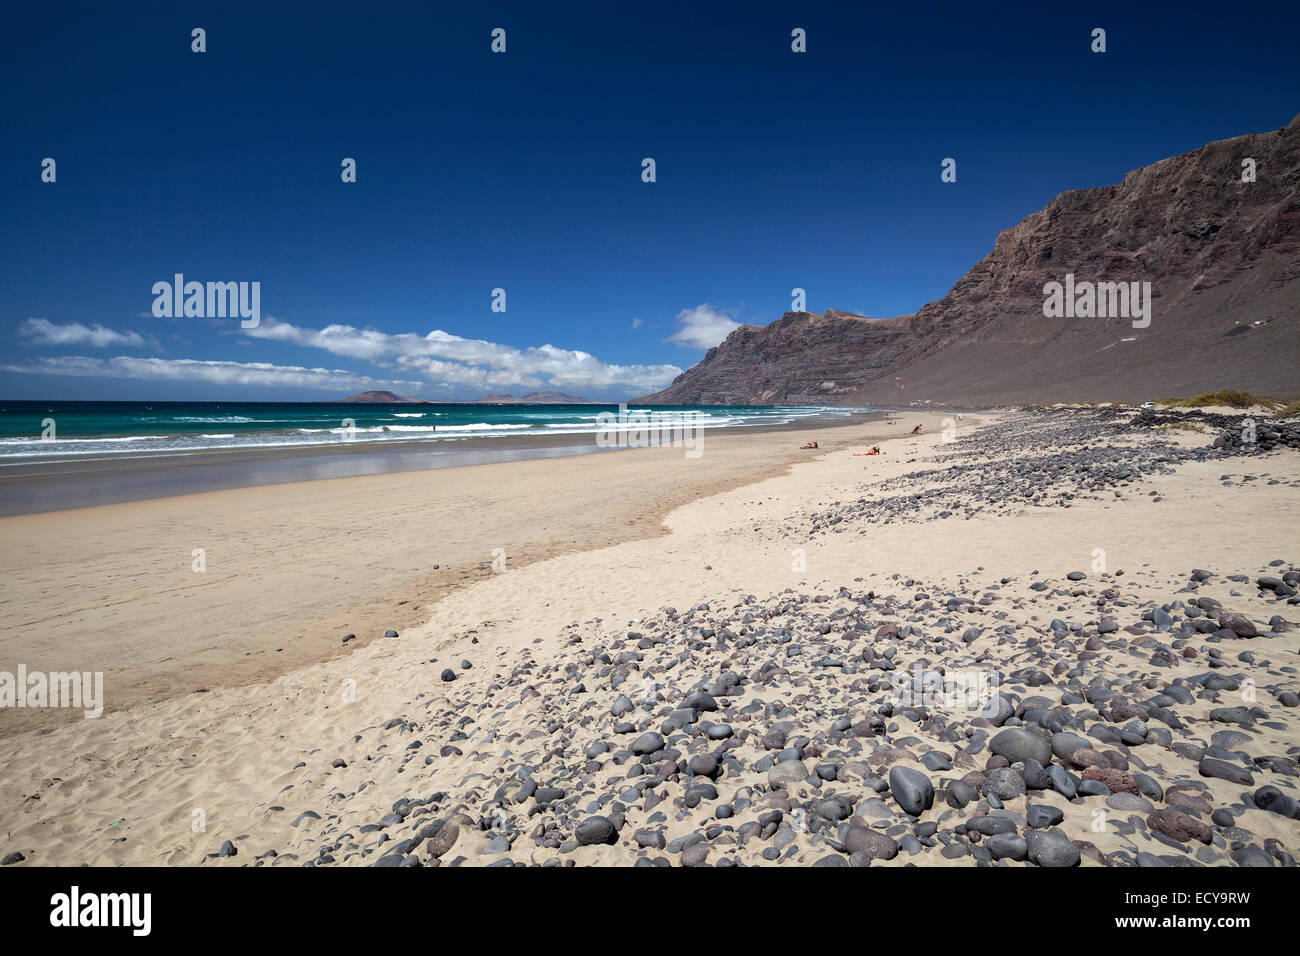 La plage de Famara, Playa de Famara, à Risco de Famara, Lanzarote, îles Canaries, Espagne Banque D'Images